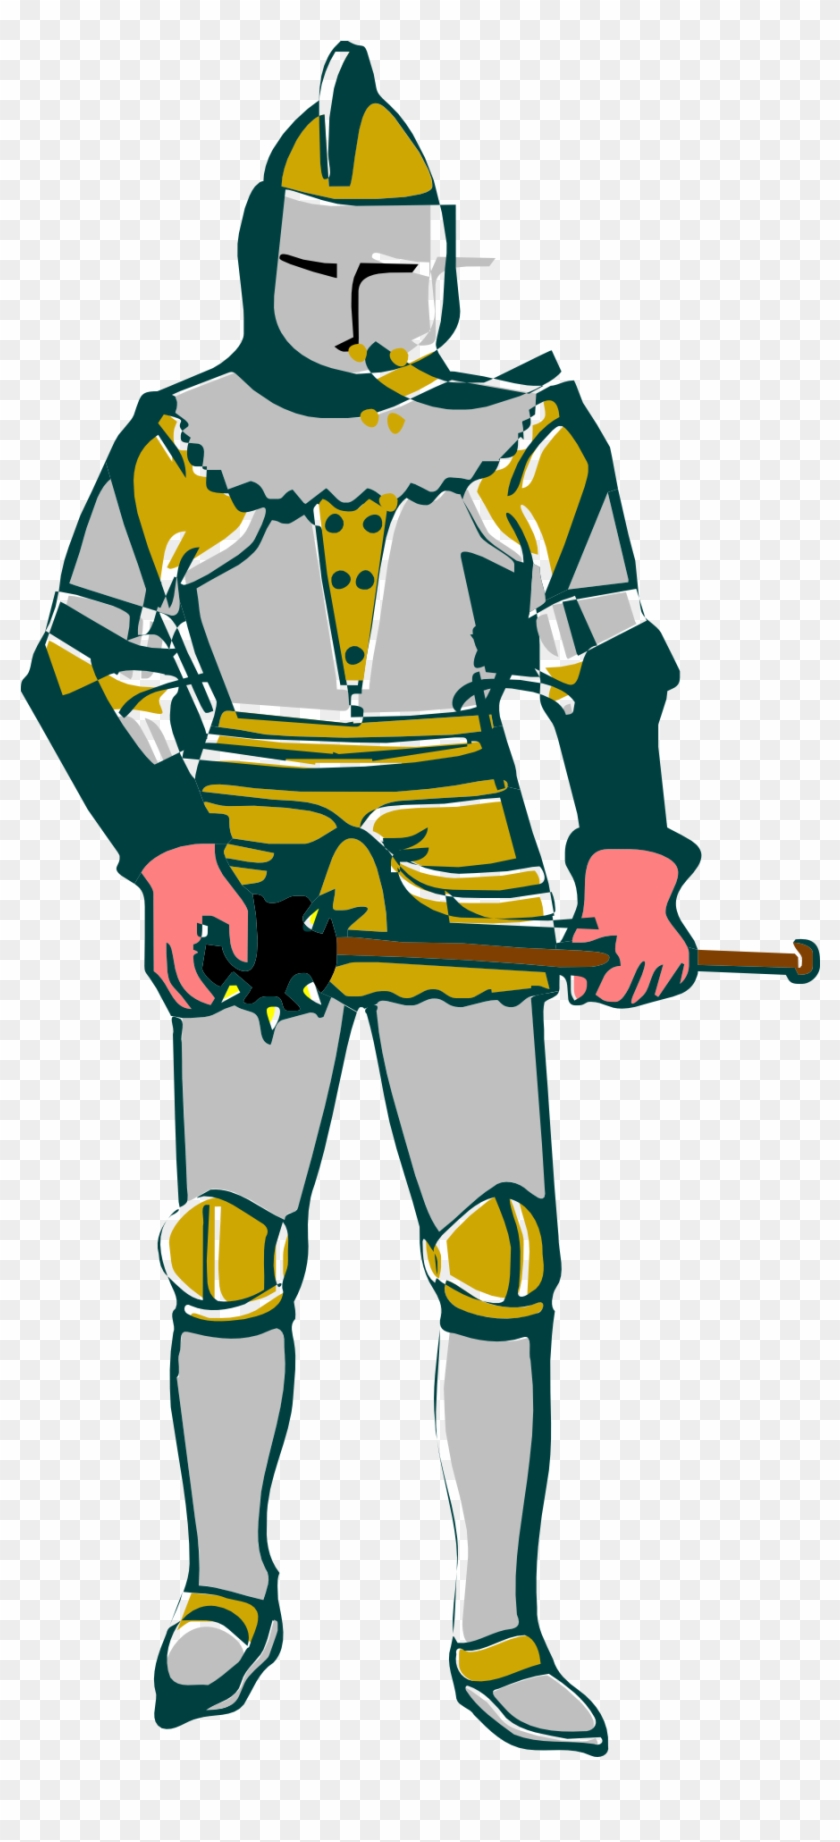 Person Man Knight Medieval Armor.